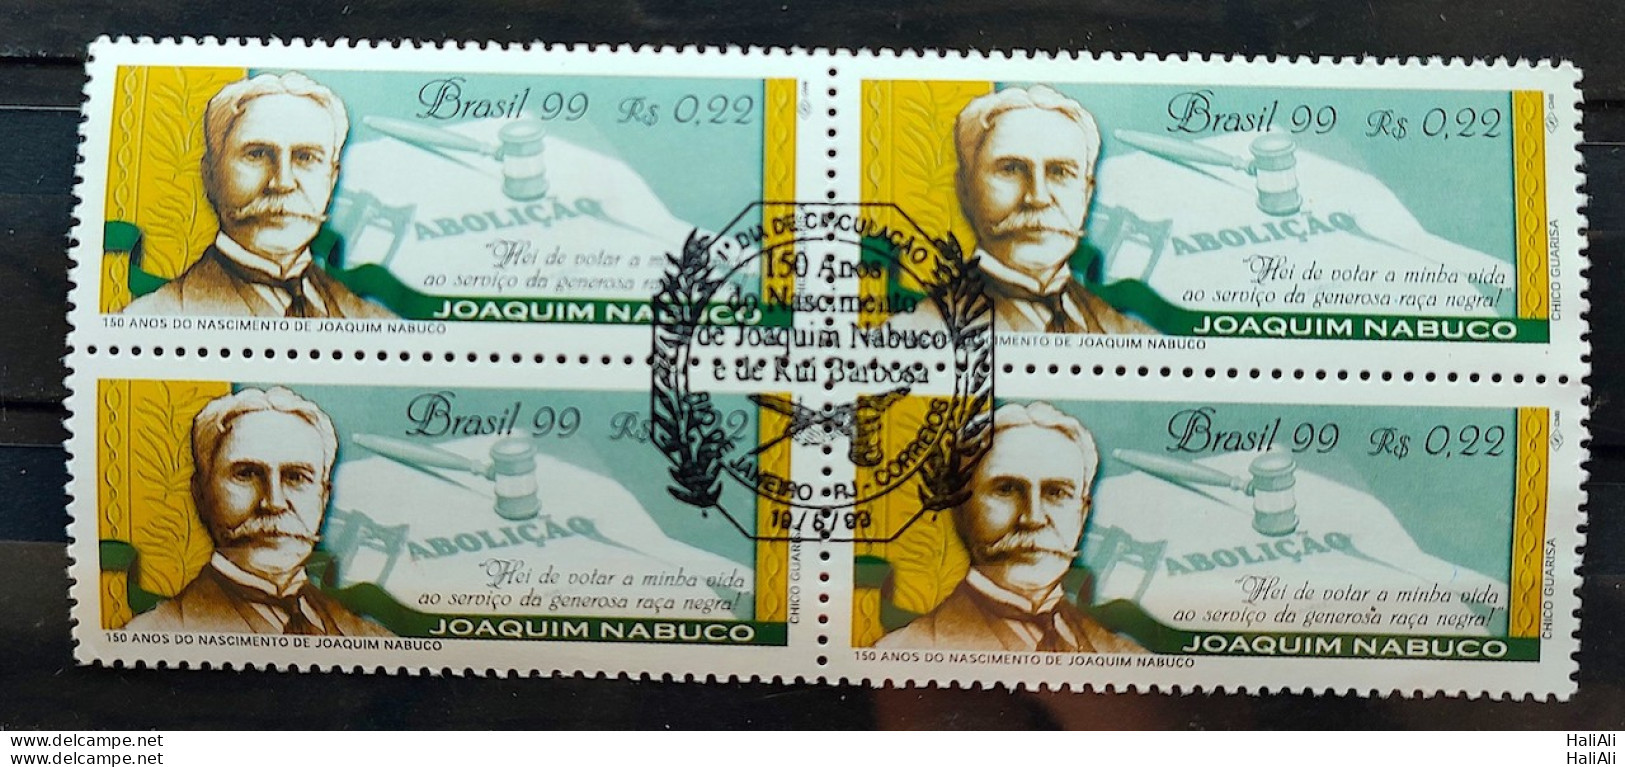 C 2210 Brazil Stamp Joaquim Nabuco Diplomacy Justic Law 1999 Block Of 4 CBC RJ - Unused Stamps